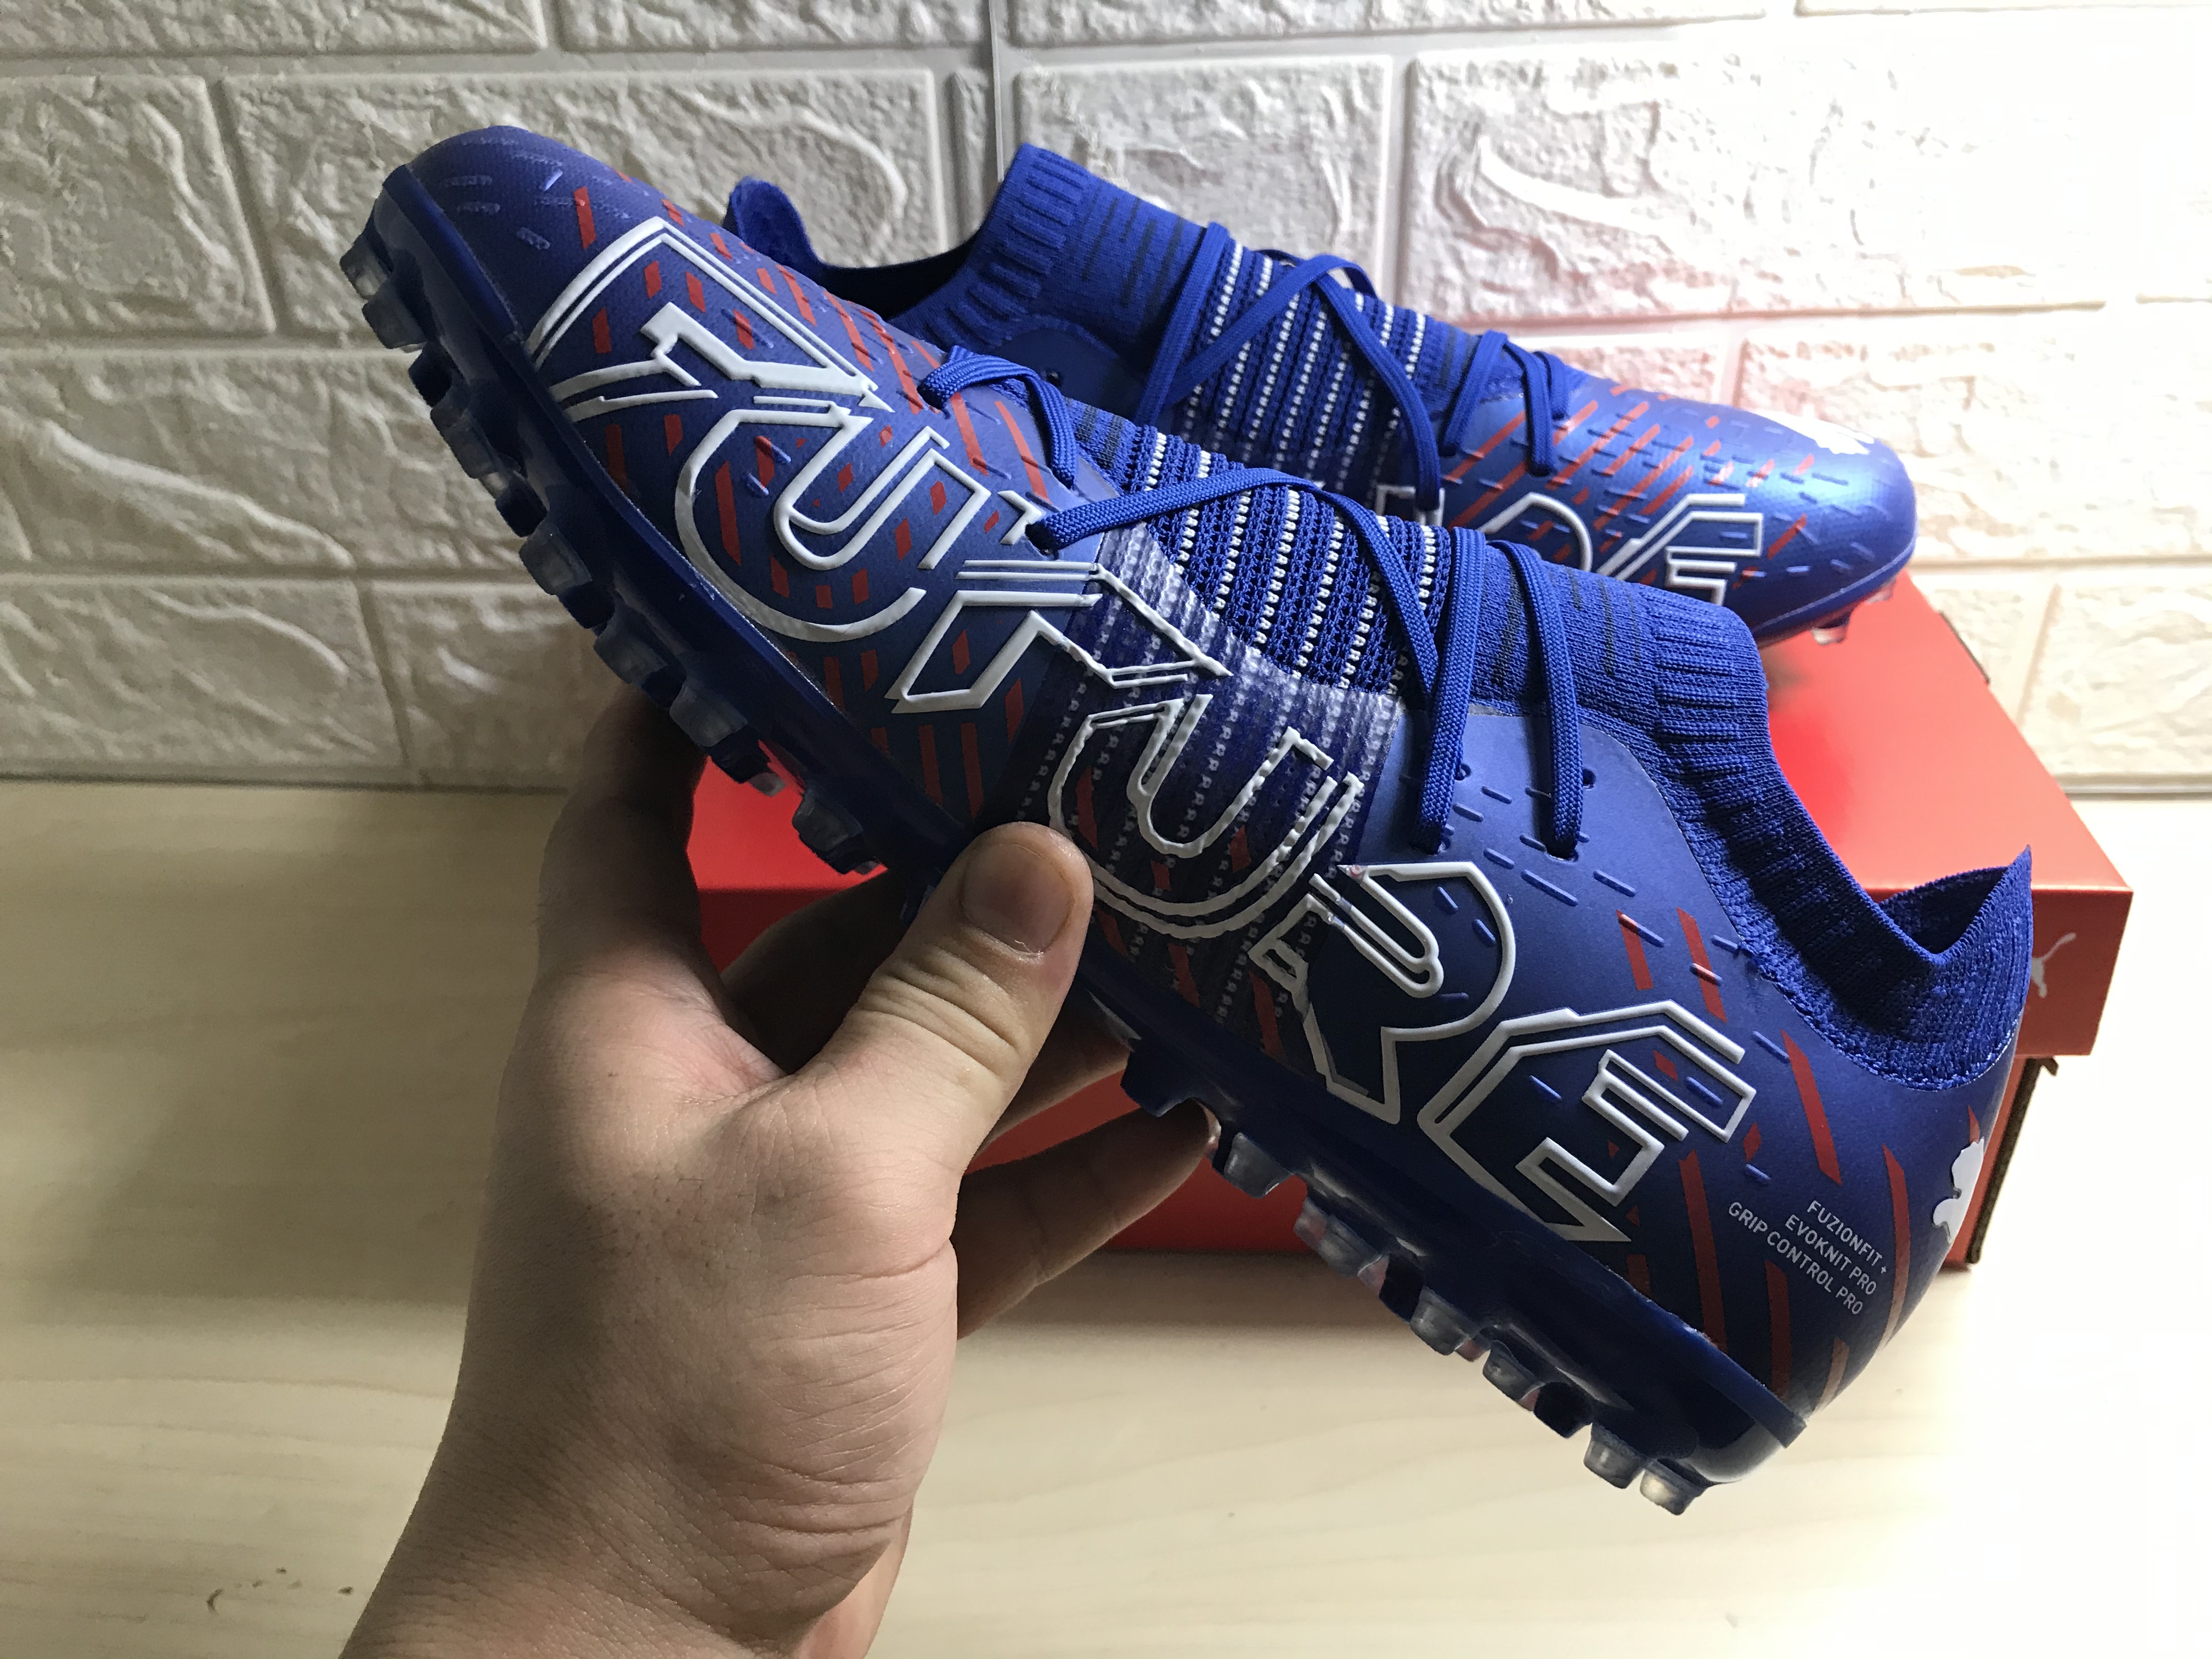 Puma Future Z 1.2 MG Blue 106481-01 - Premium Performance Football Boots